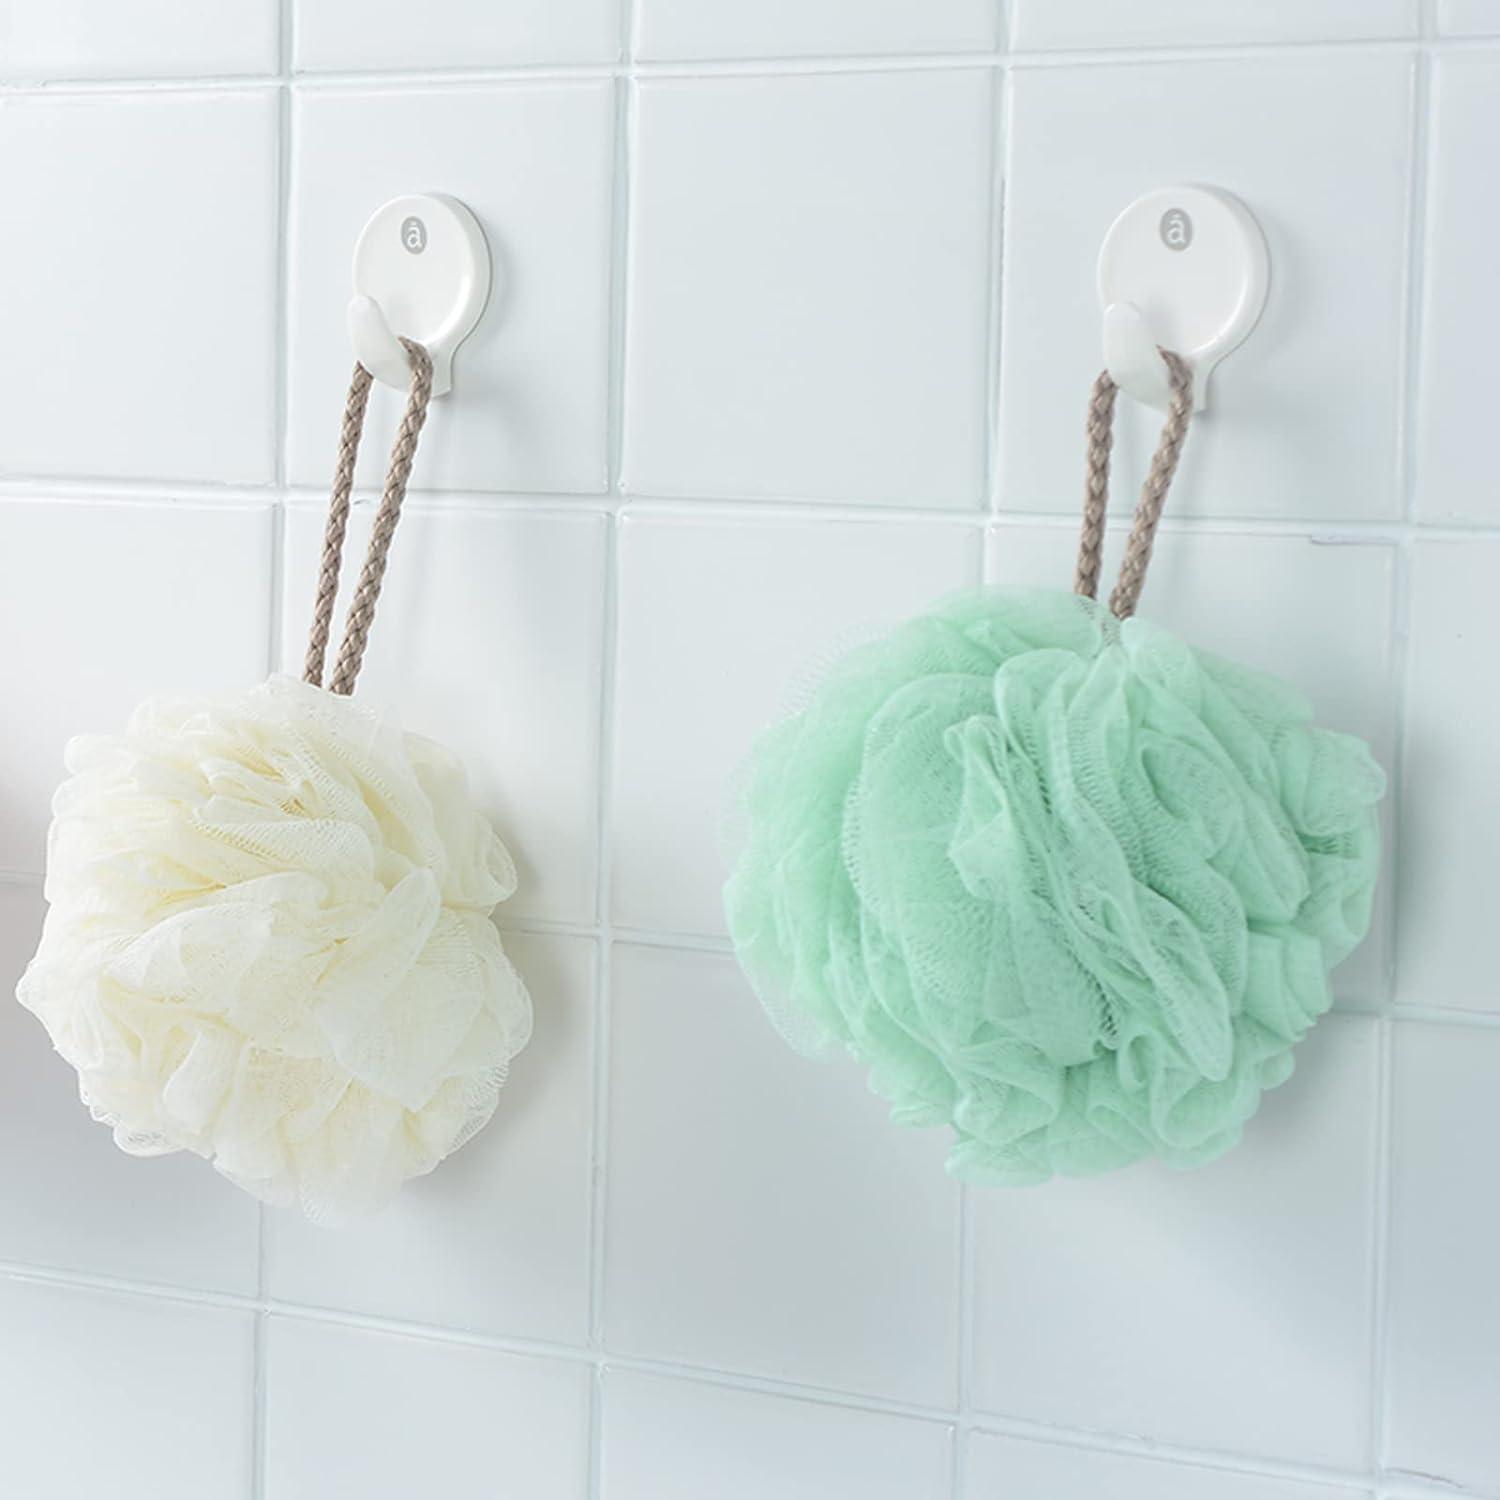 Autrucker Bath Sponges Shower Loofahs 50g Mesh Balls Sponge 4 Solid Colors for Body Wash Bathroom Men Women - 4 Pack Scrubber Cleaning Loofah Bathing